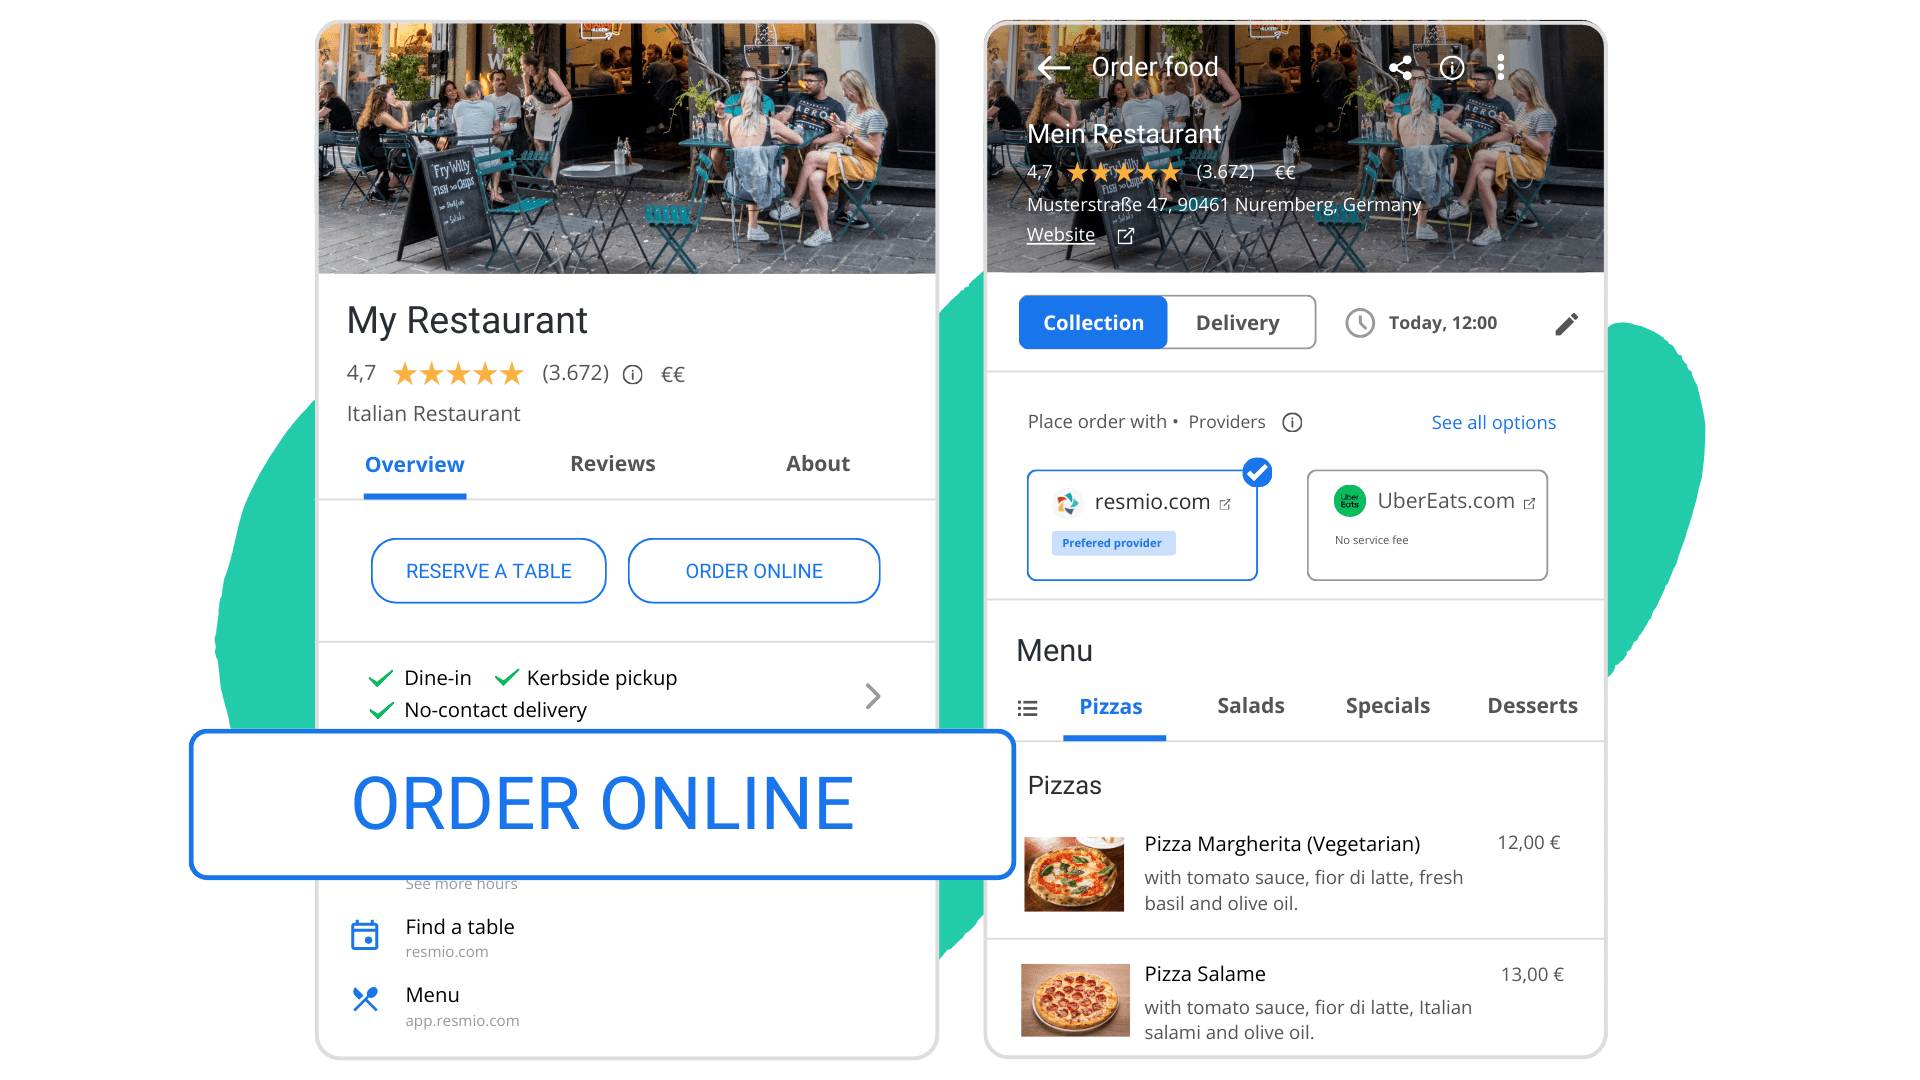 Order Online in Google Business Profile